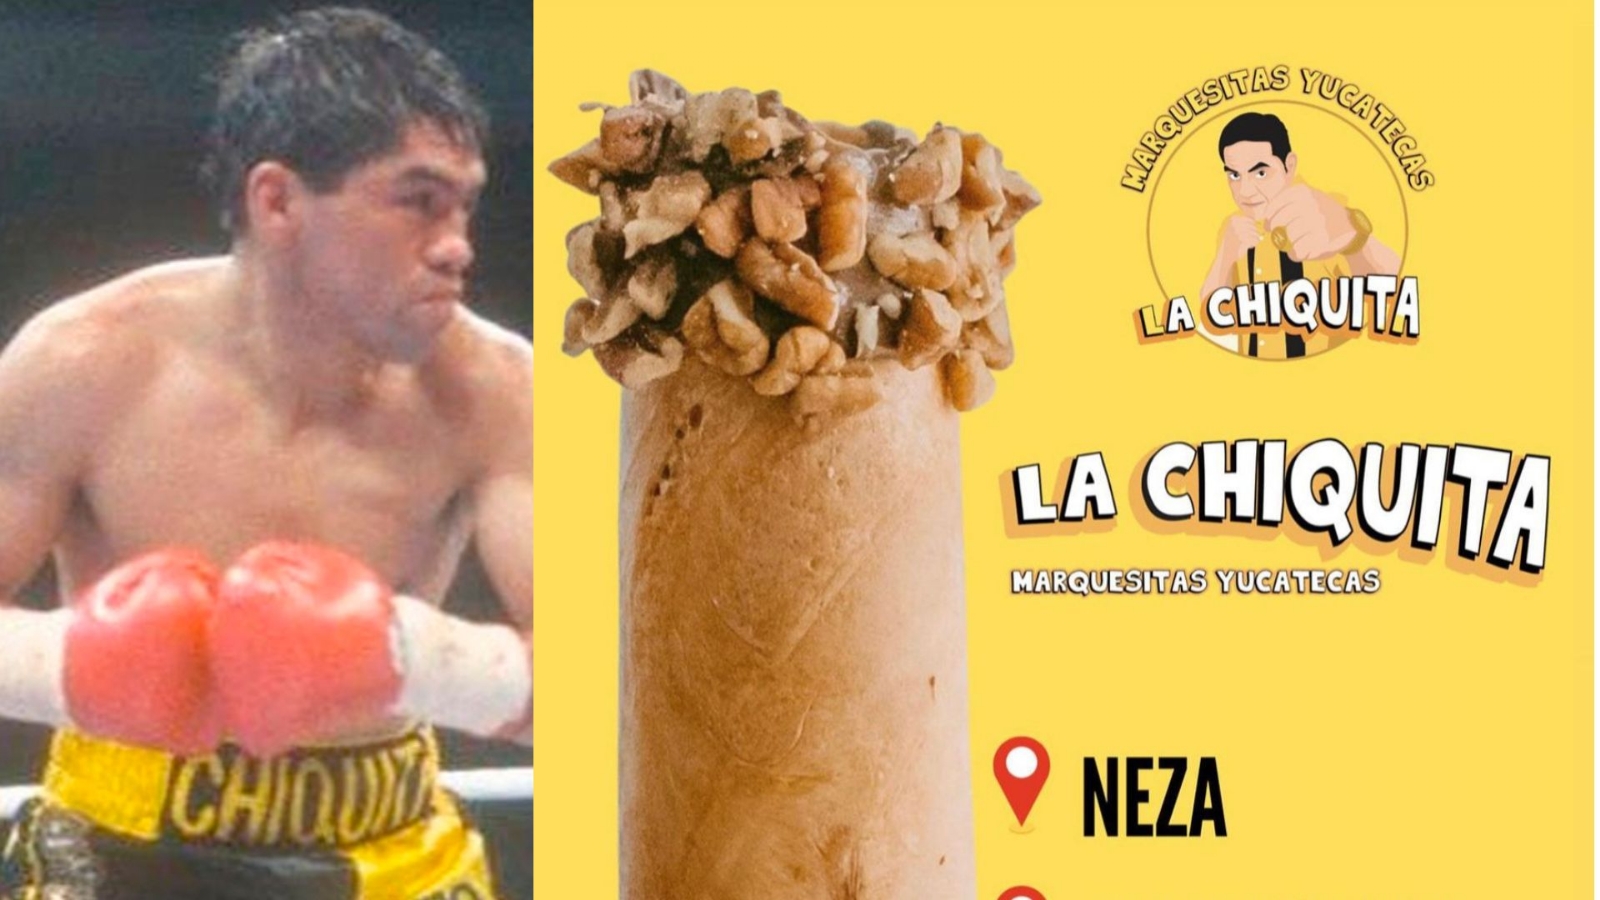 “La Chiquita” González de boxeador a vendedor de marquesitas